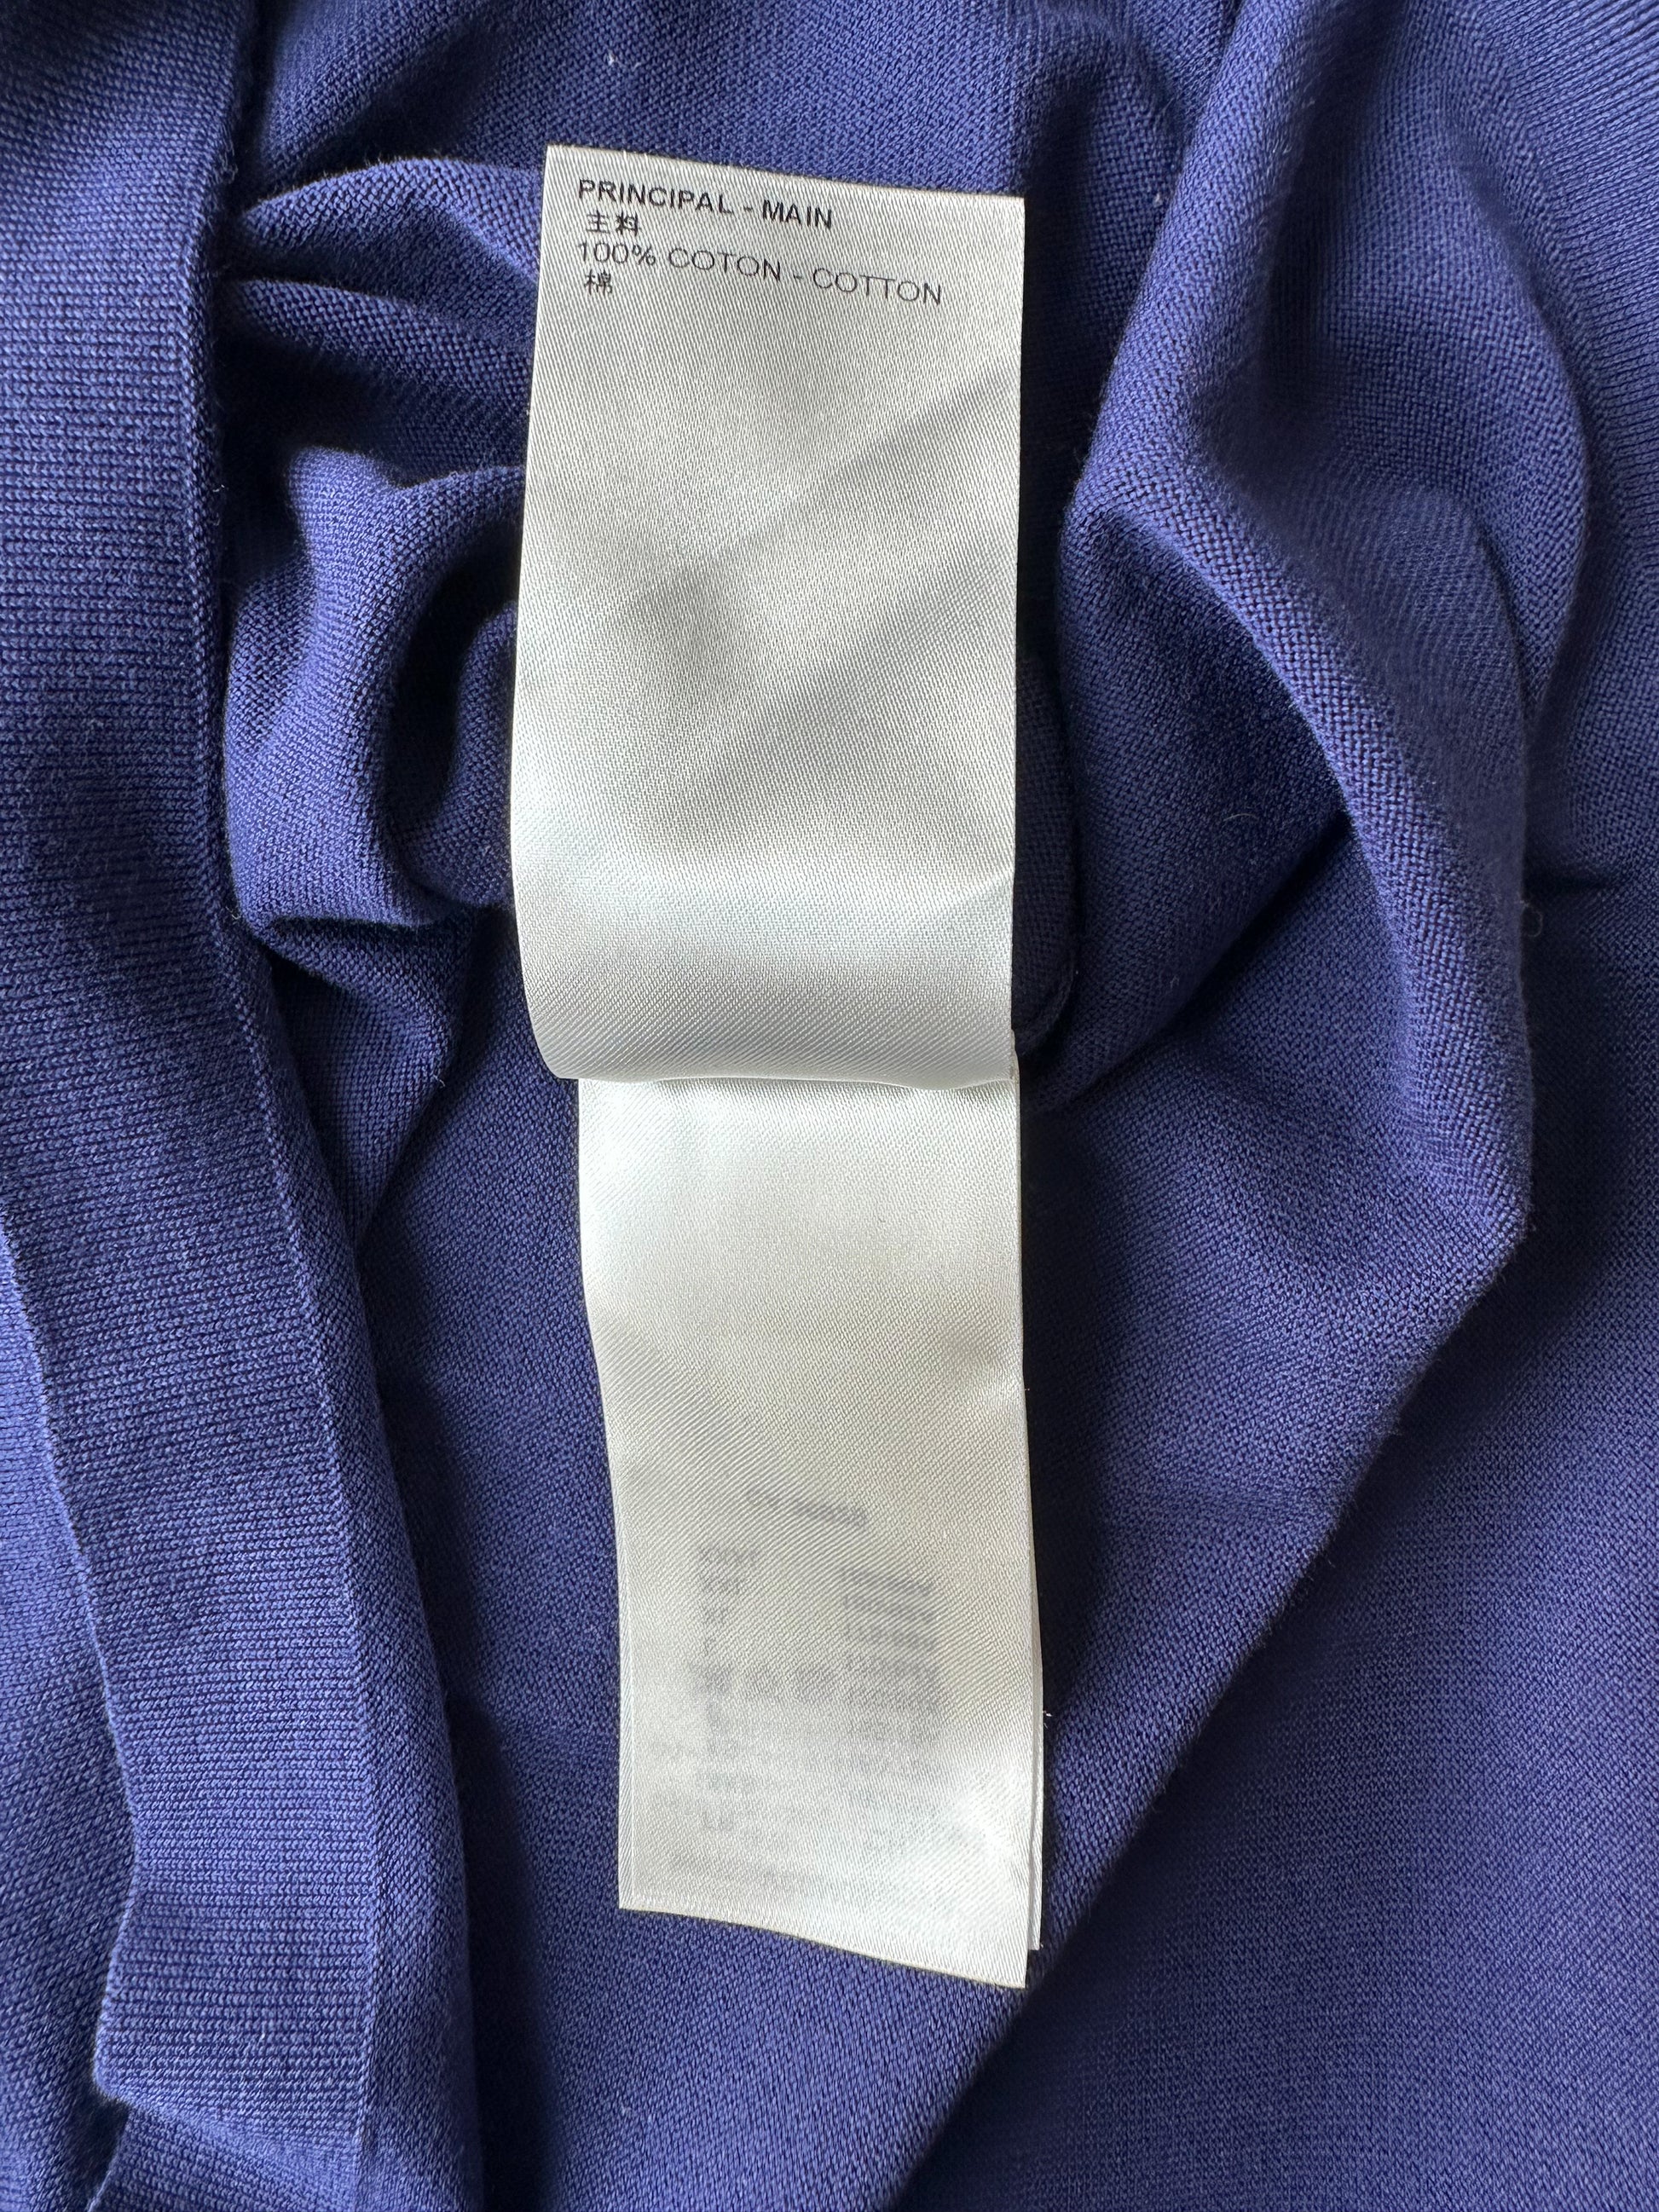 Louis Vuitton Blue & White Script Logo Intarsia T-Shirt